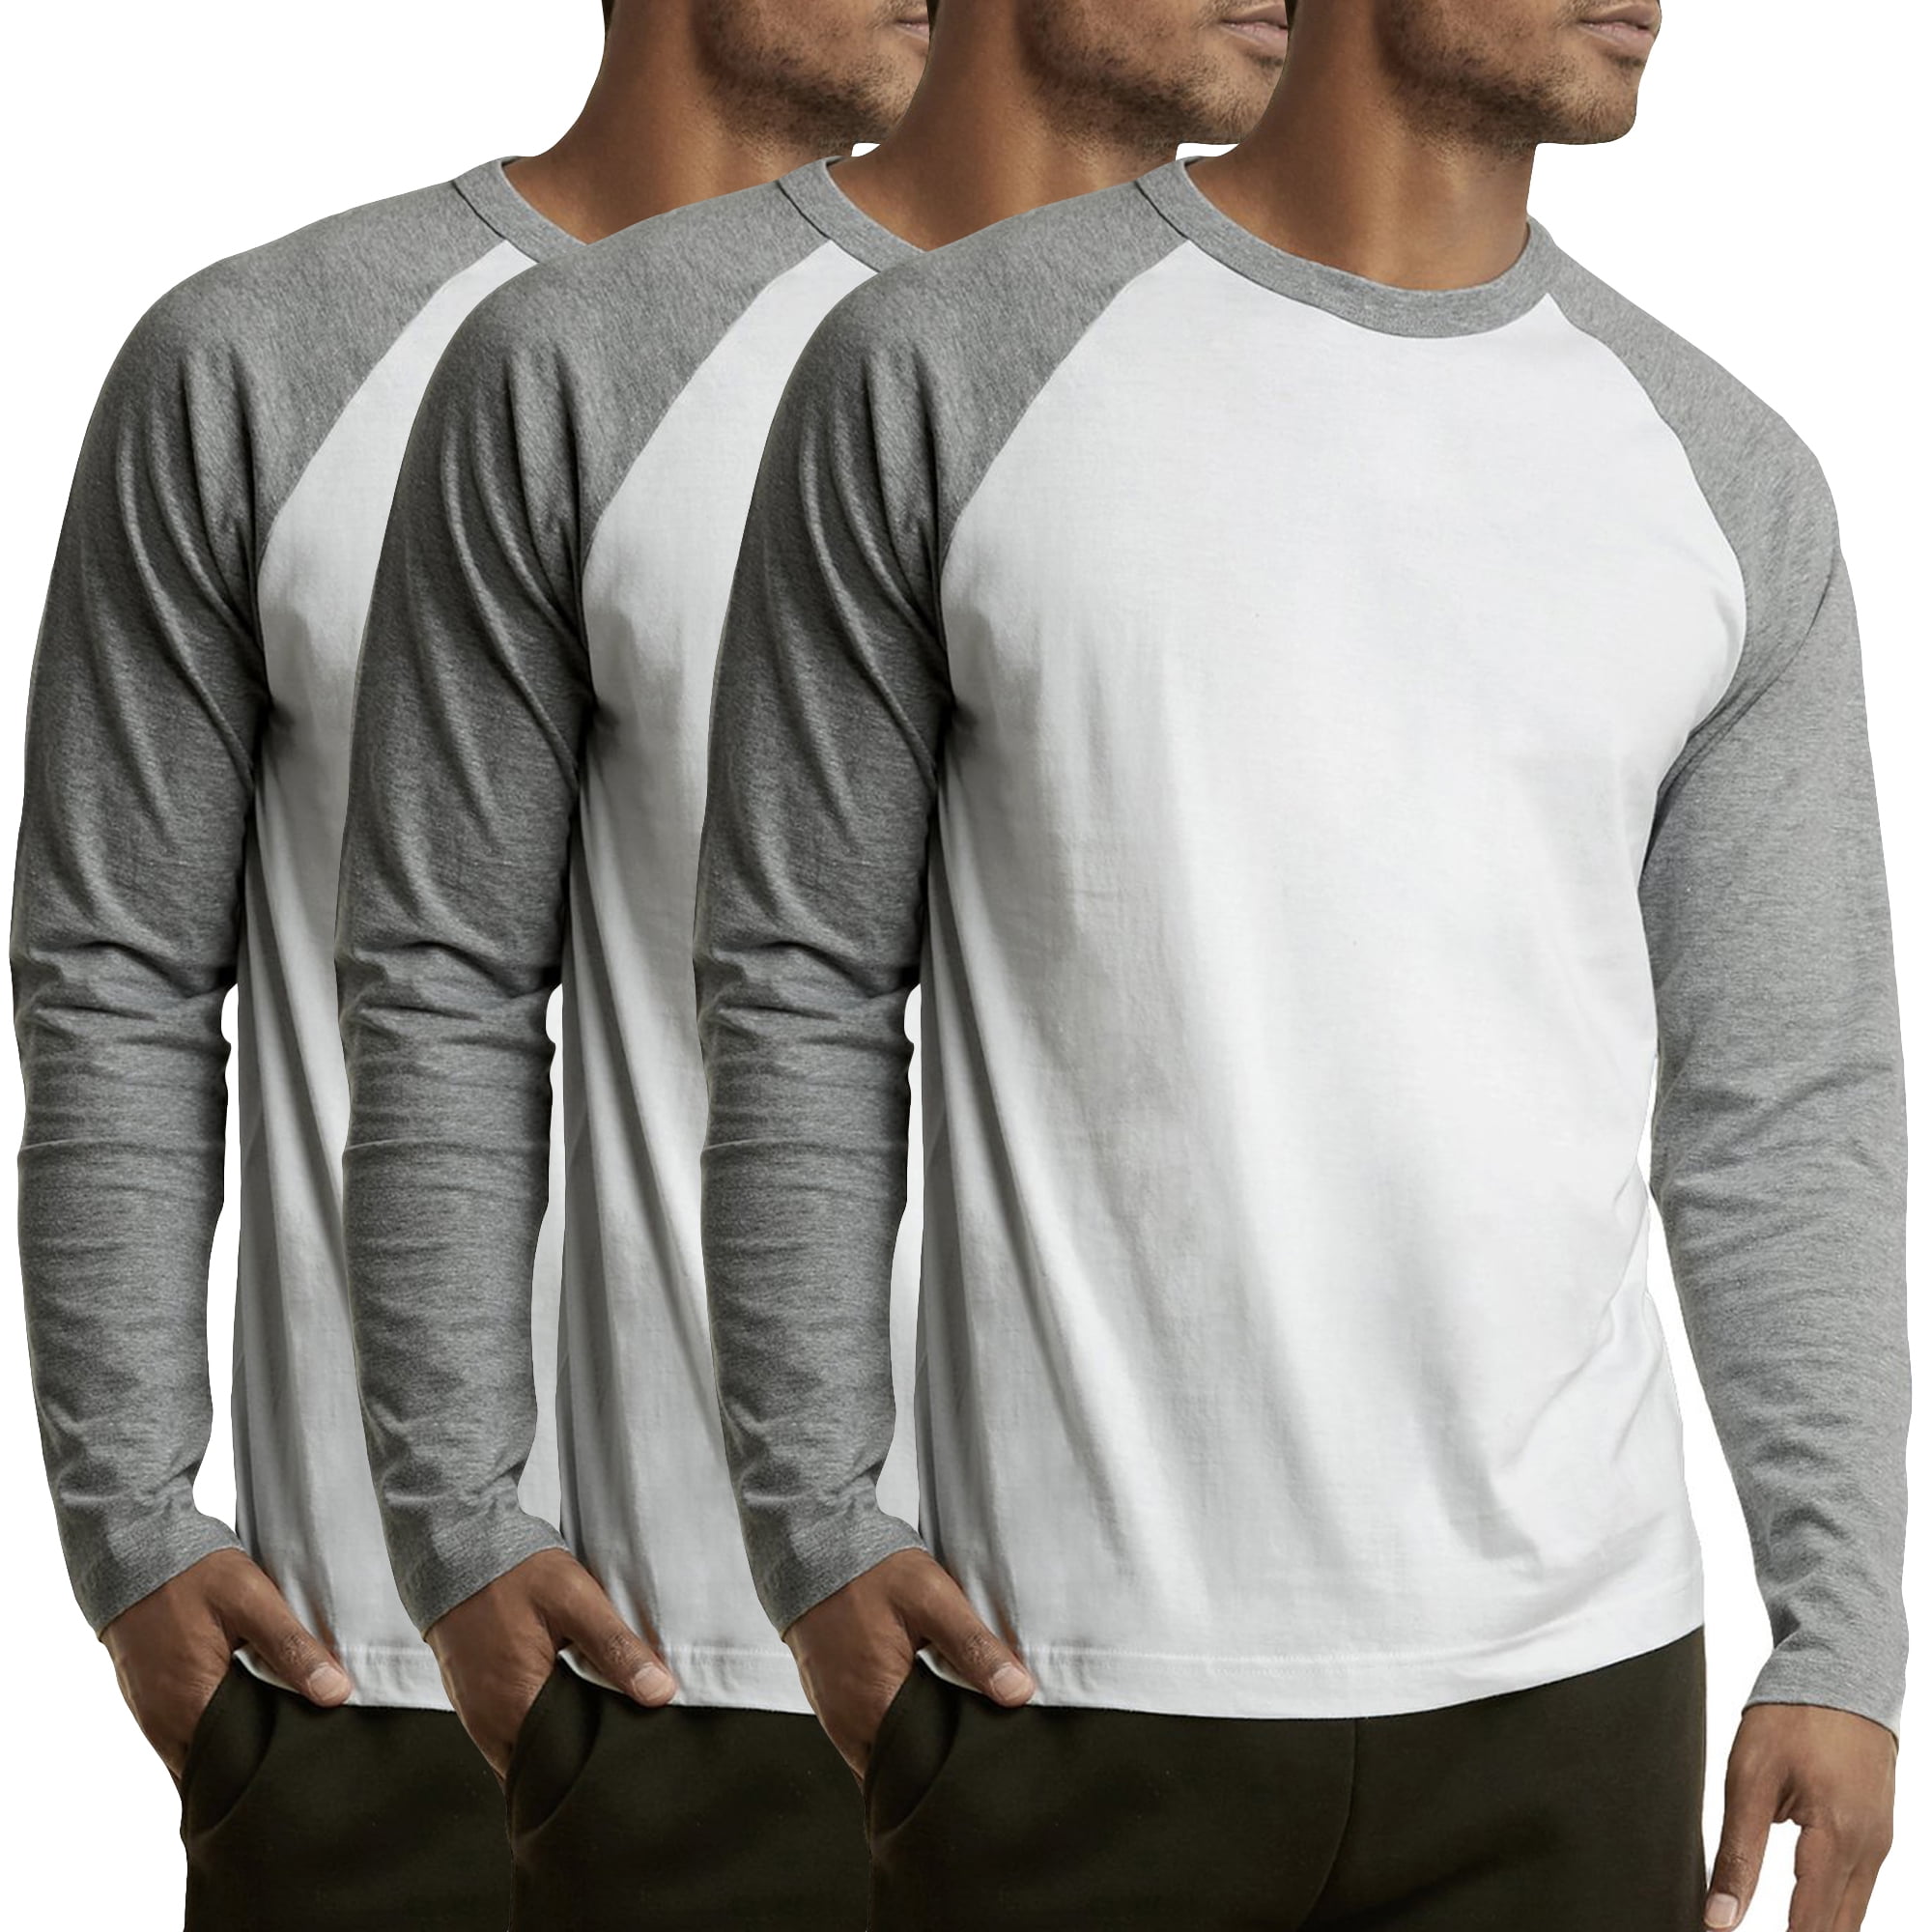 TL Men's 4 Pack 3/4 Sleeve Baseball Cotton Crew Neck Jersey Raglan Tee Shirts